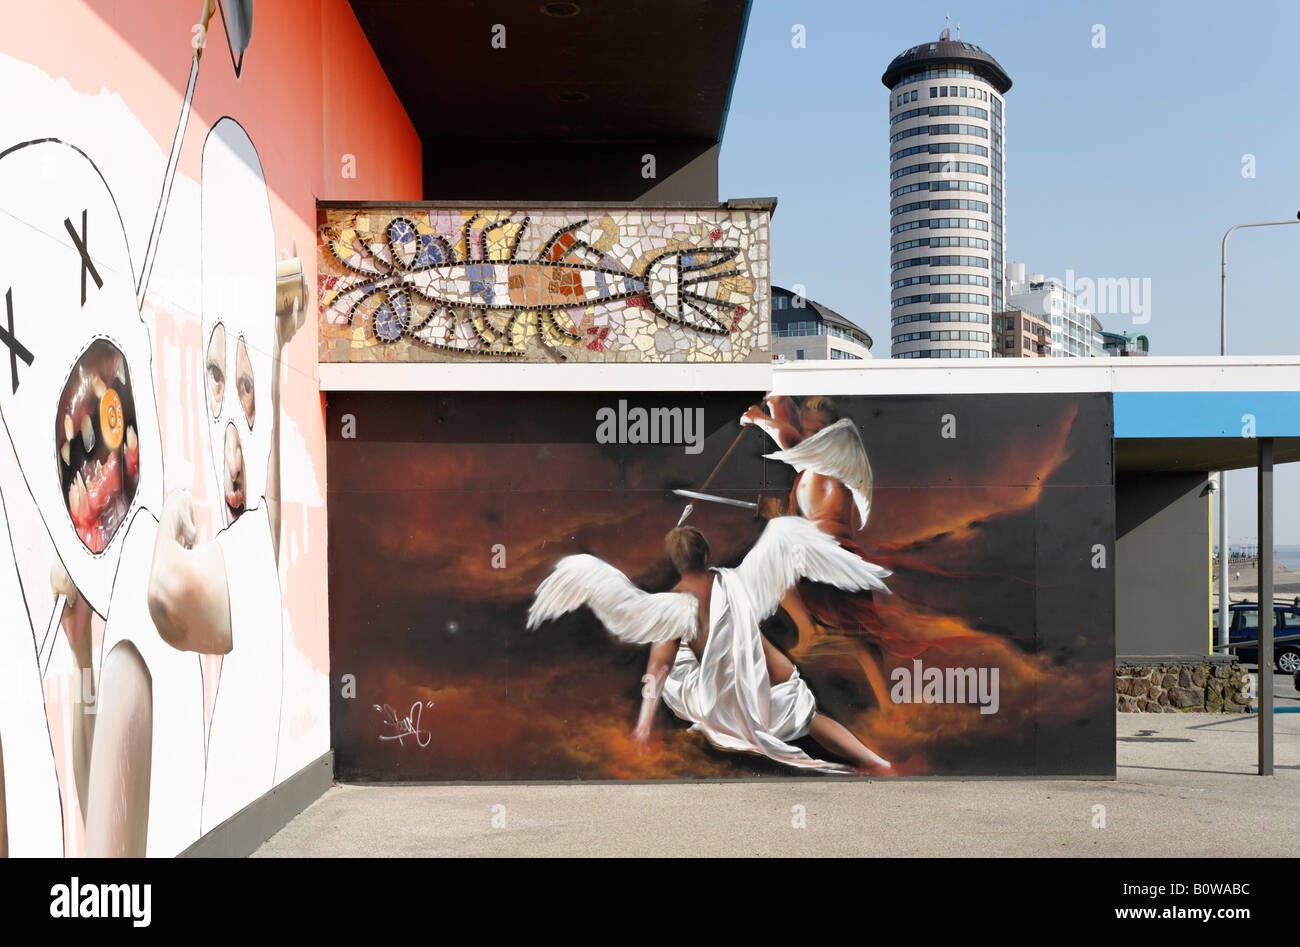 Projet d'art Graffiti, abandonnés Britannia Hotel, Boulevard Evertsen, Vlissingen, Walcheren, Zélande, Pays-Bas, Europe Banque D'Images